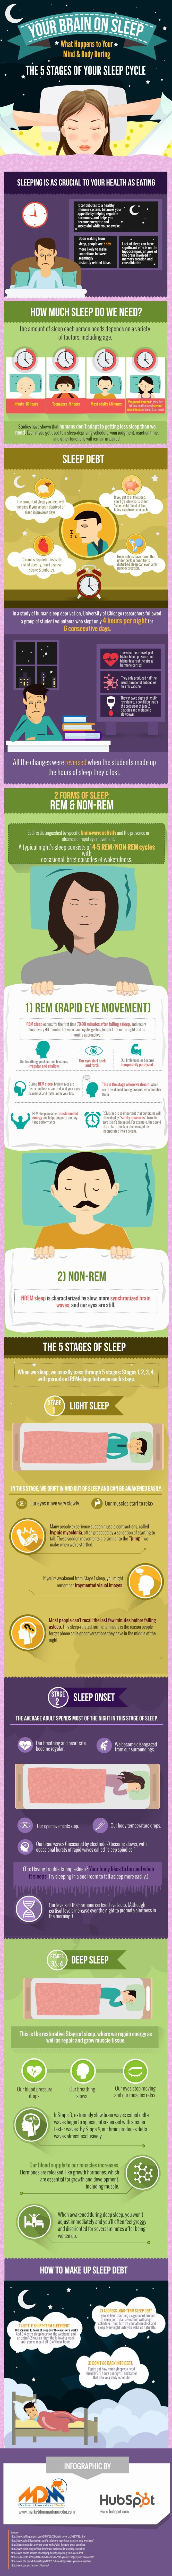 Your Brain on Sleep [Infographic]